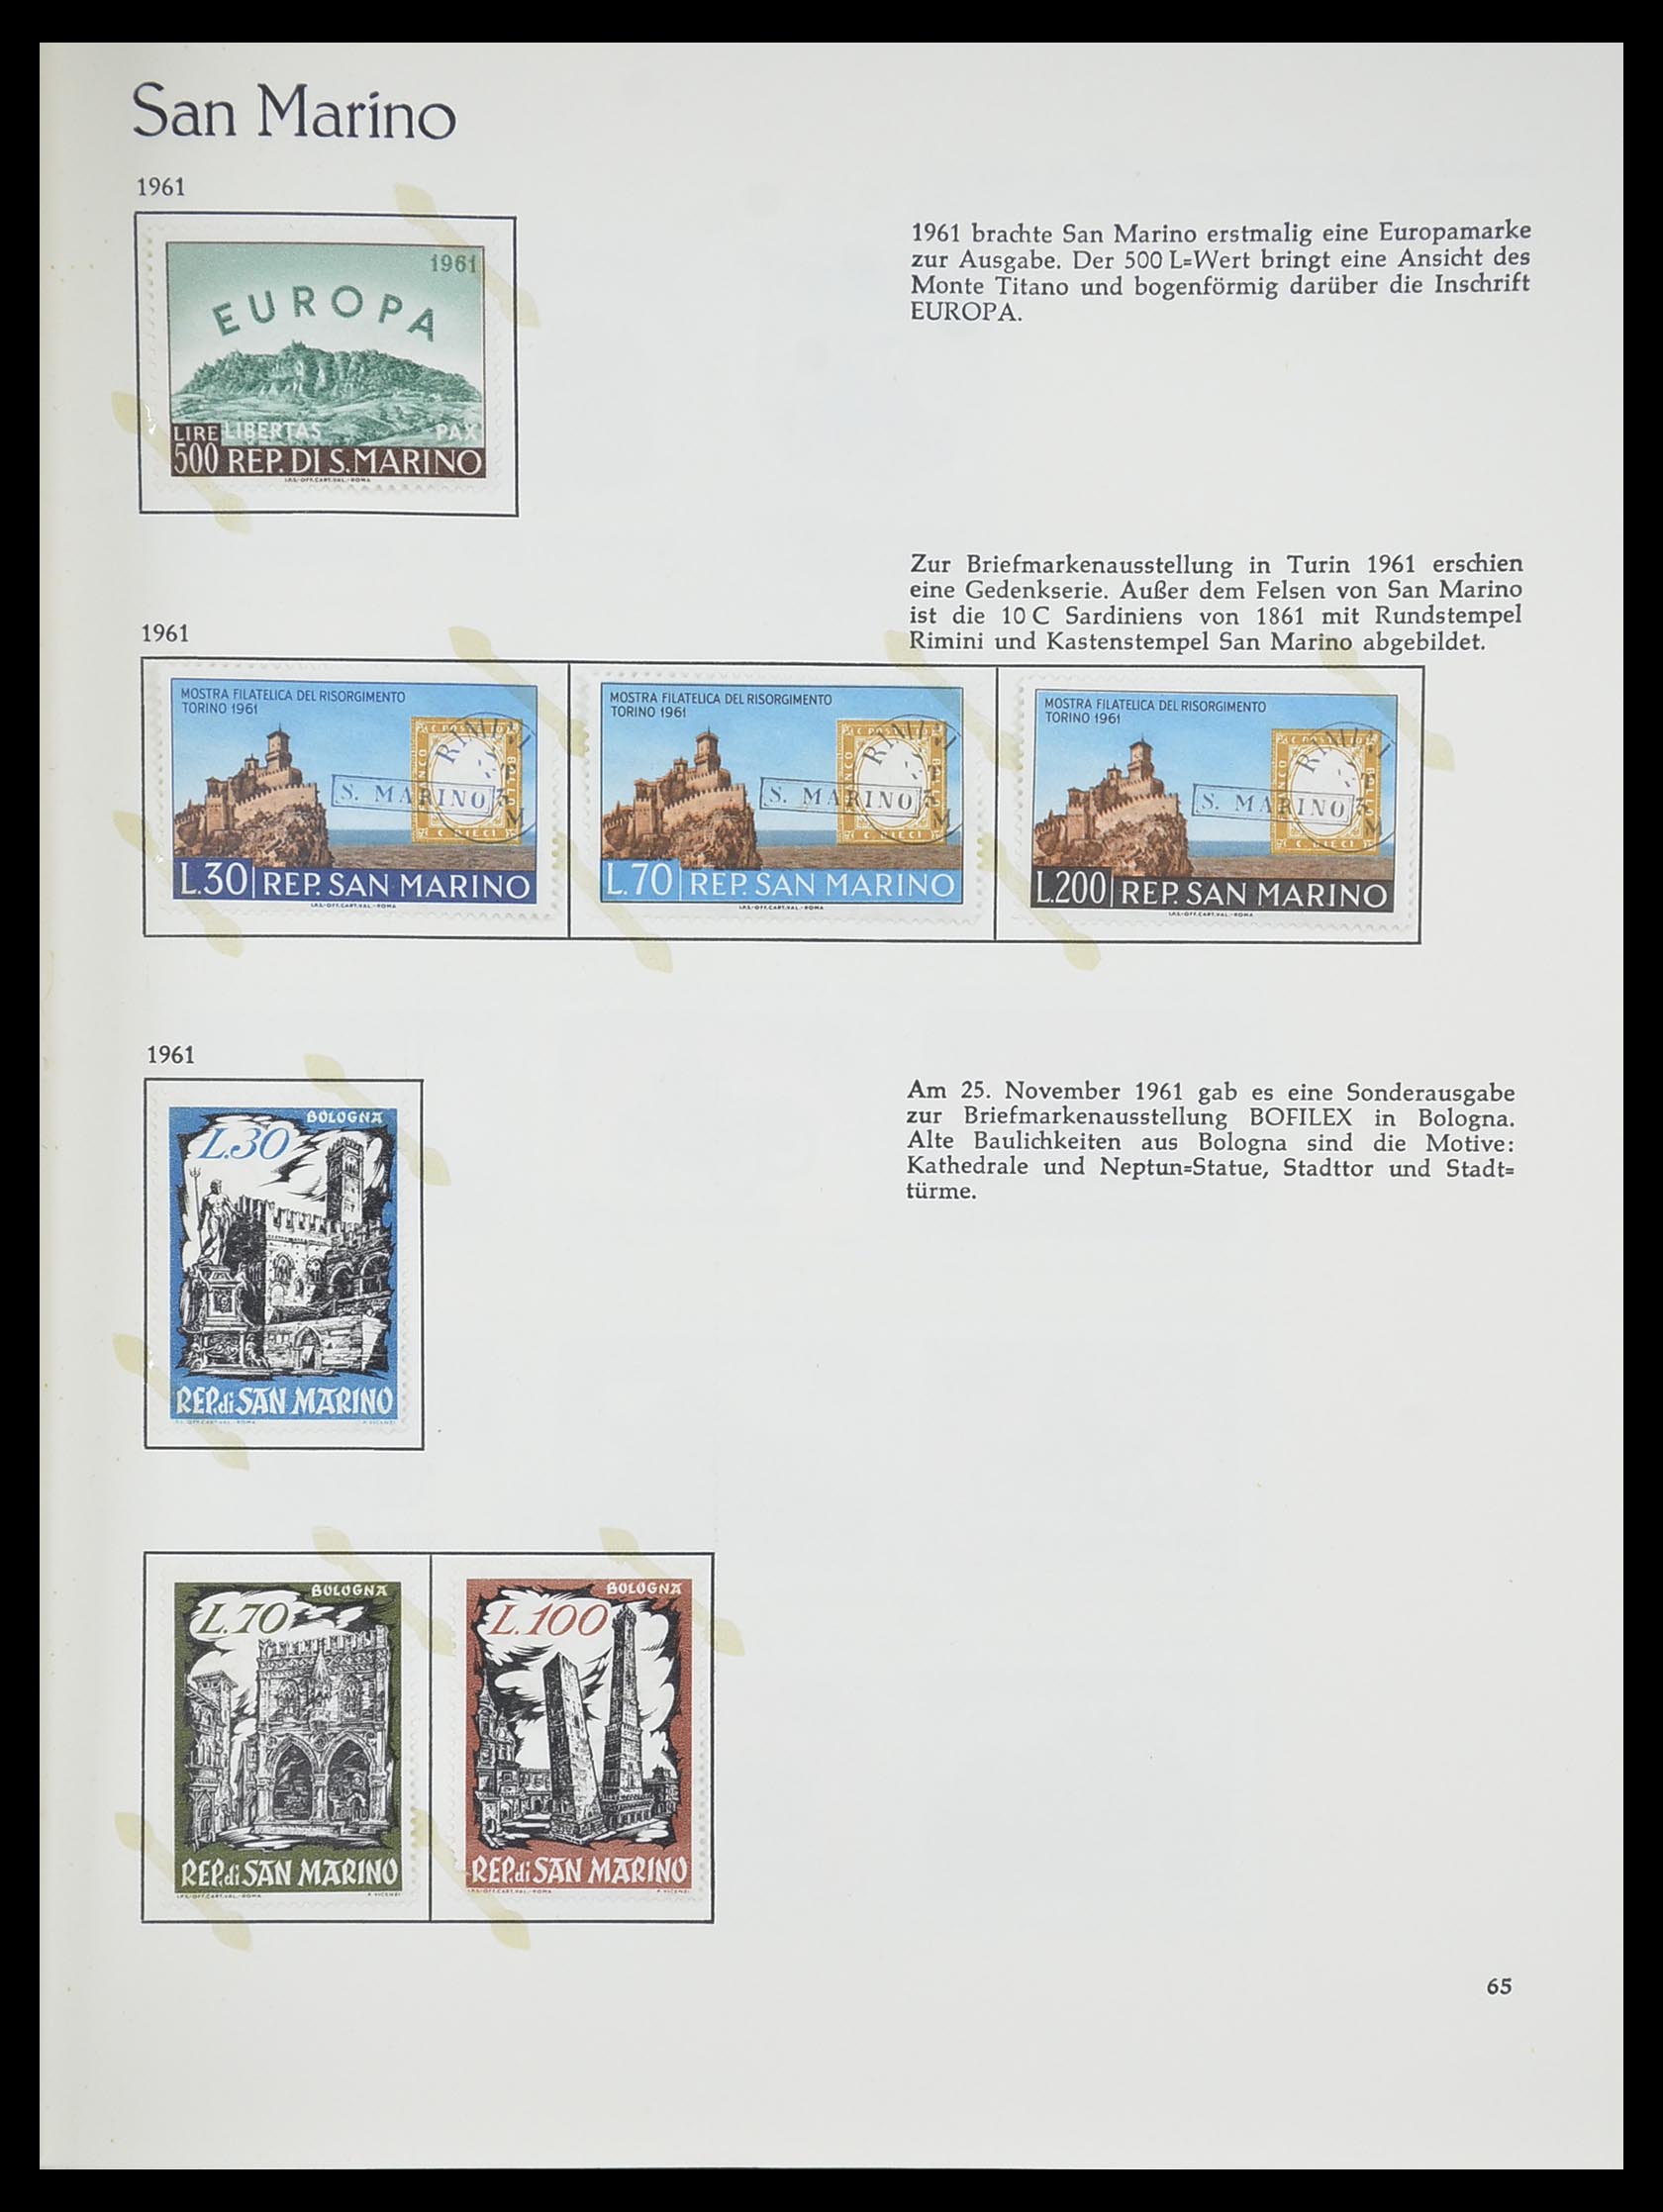 33701 065 - Stamp collection 33701 San Marino 1877-1962.